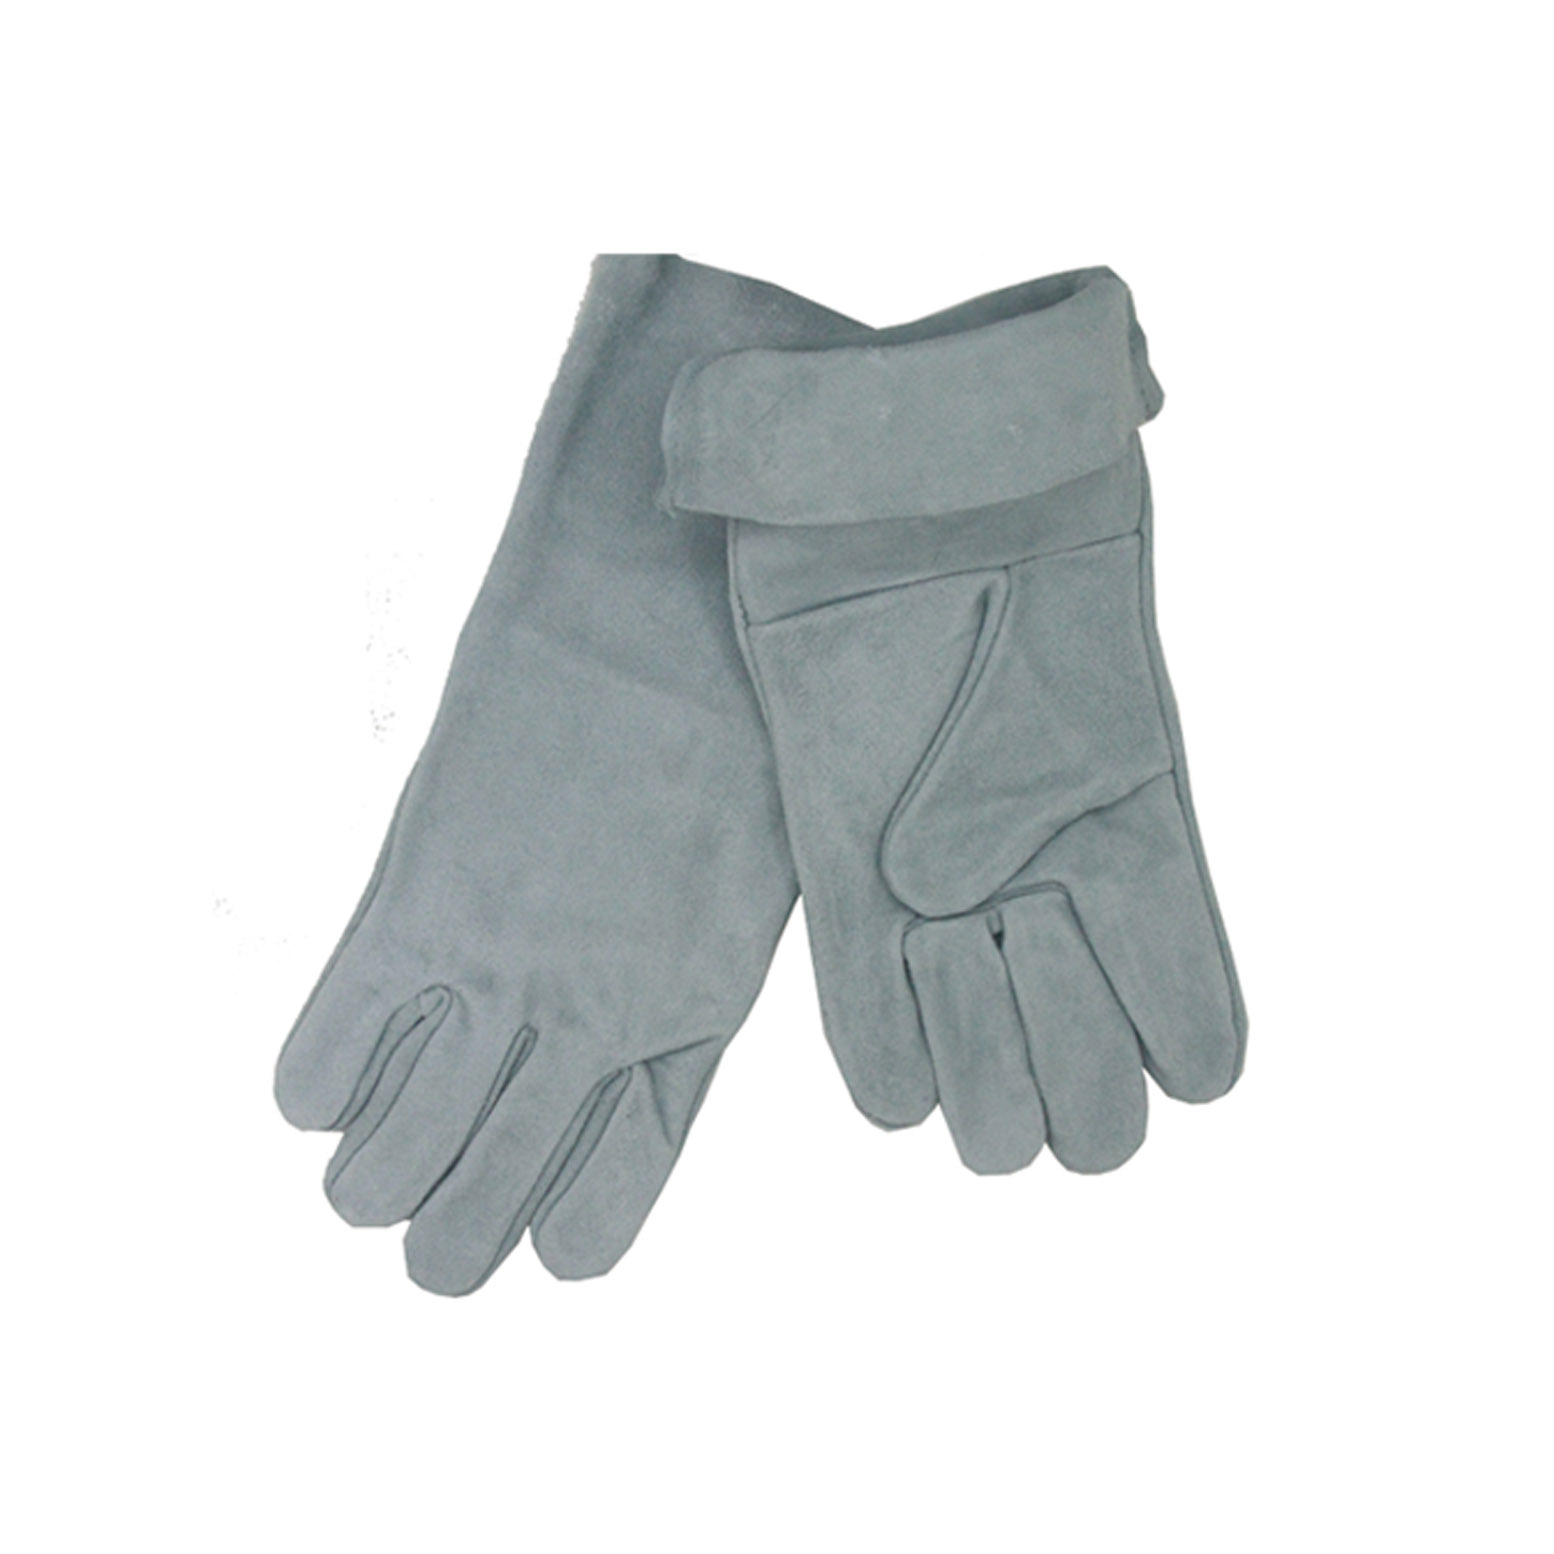 Get Star Weld Single-layer leather welding glove